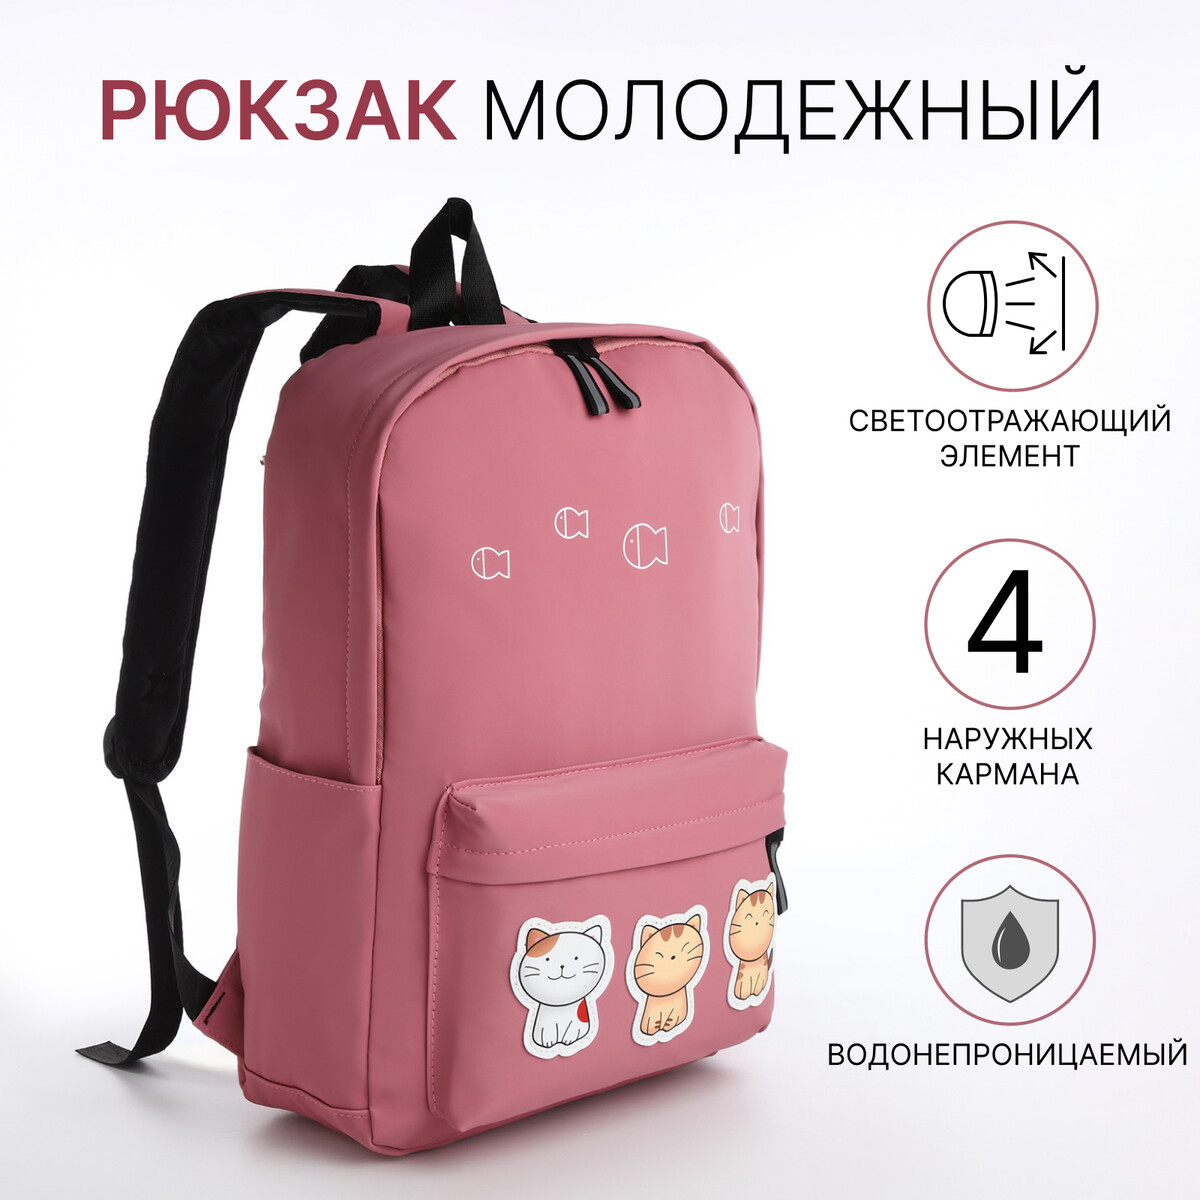 Рюкзак молодежный из текстиля на молнии, 4 кармана, цвет розовый рюкзак молодежный из текстиля на молнии 4 кармана белый